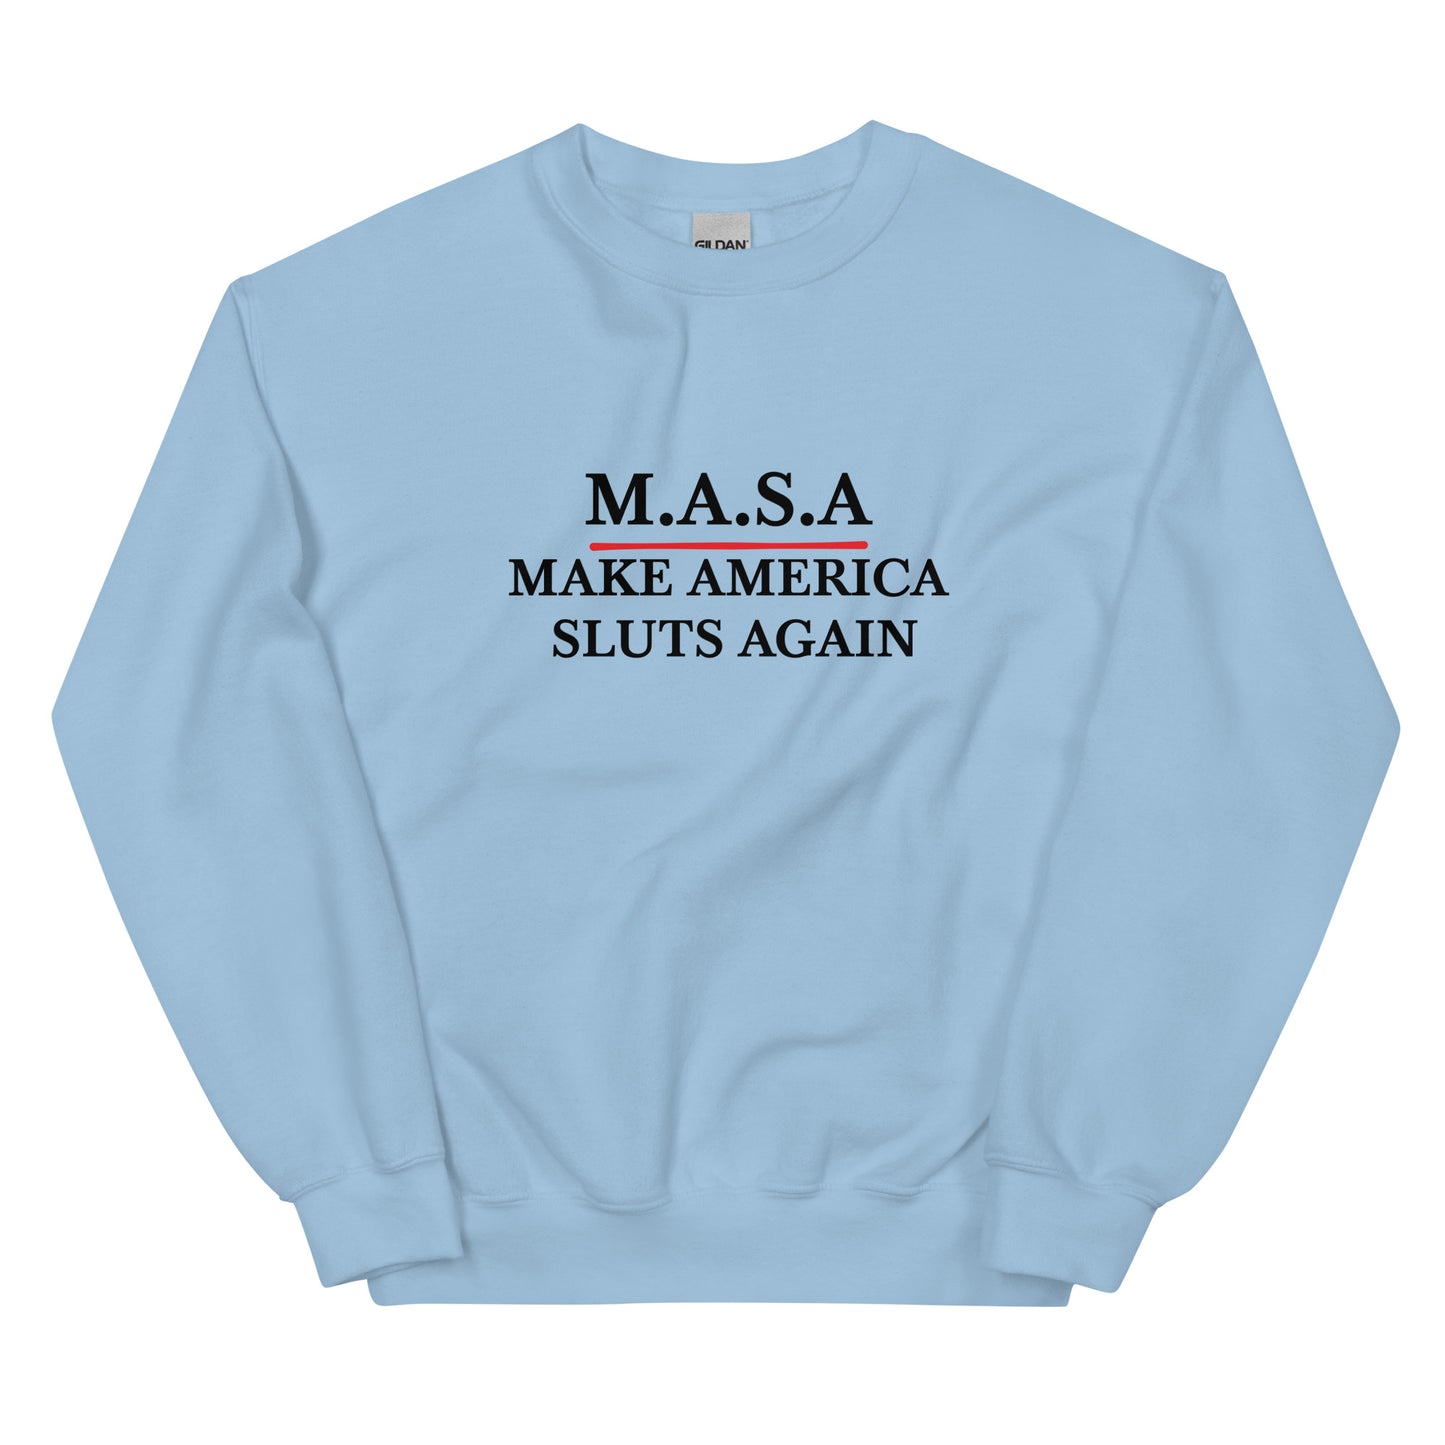 MAKE AMERICA SLUTS AGAIN sweatshirt